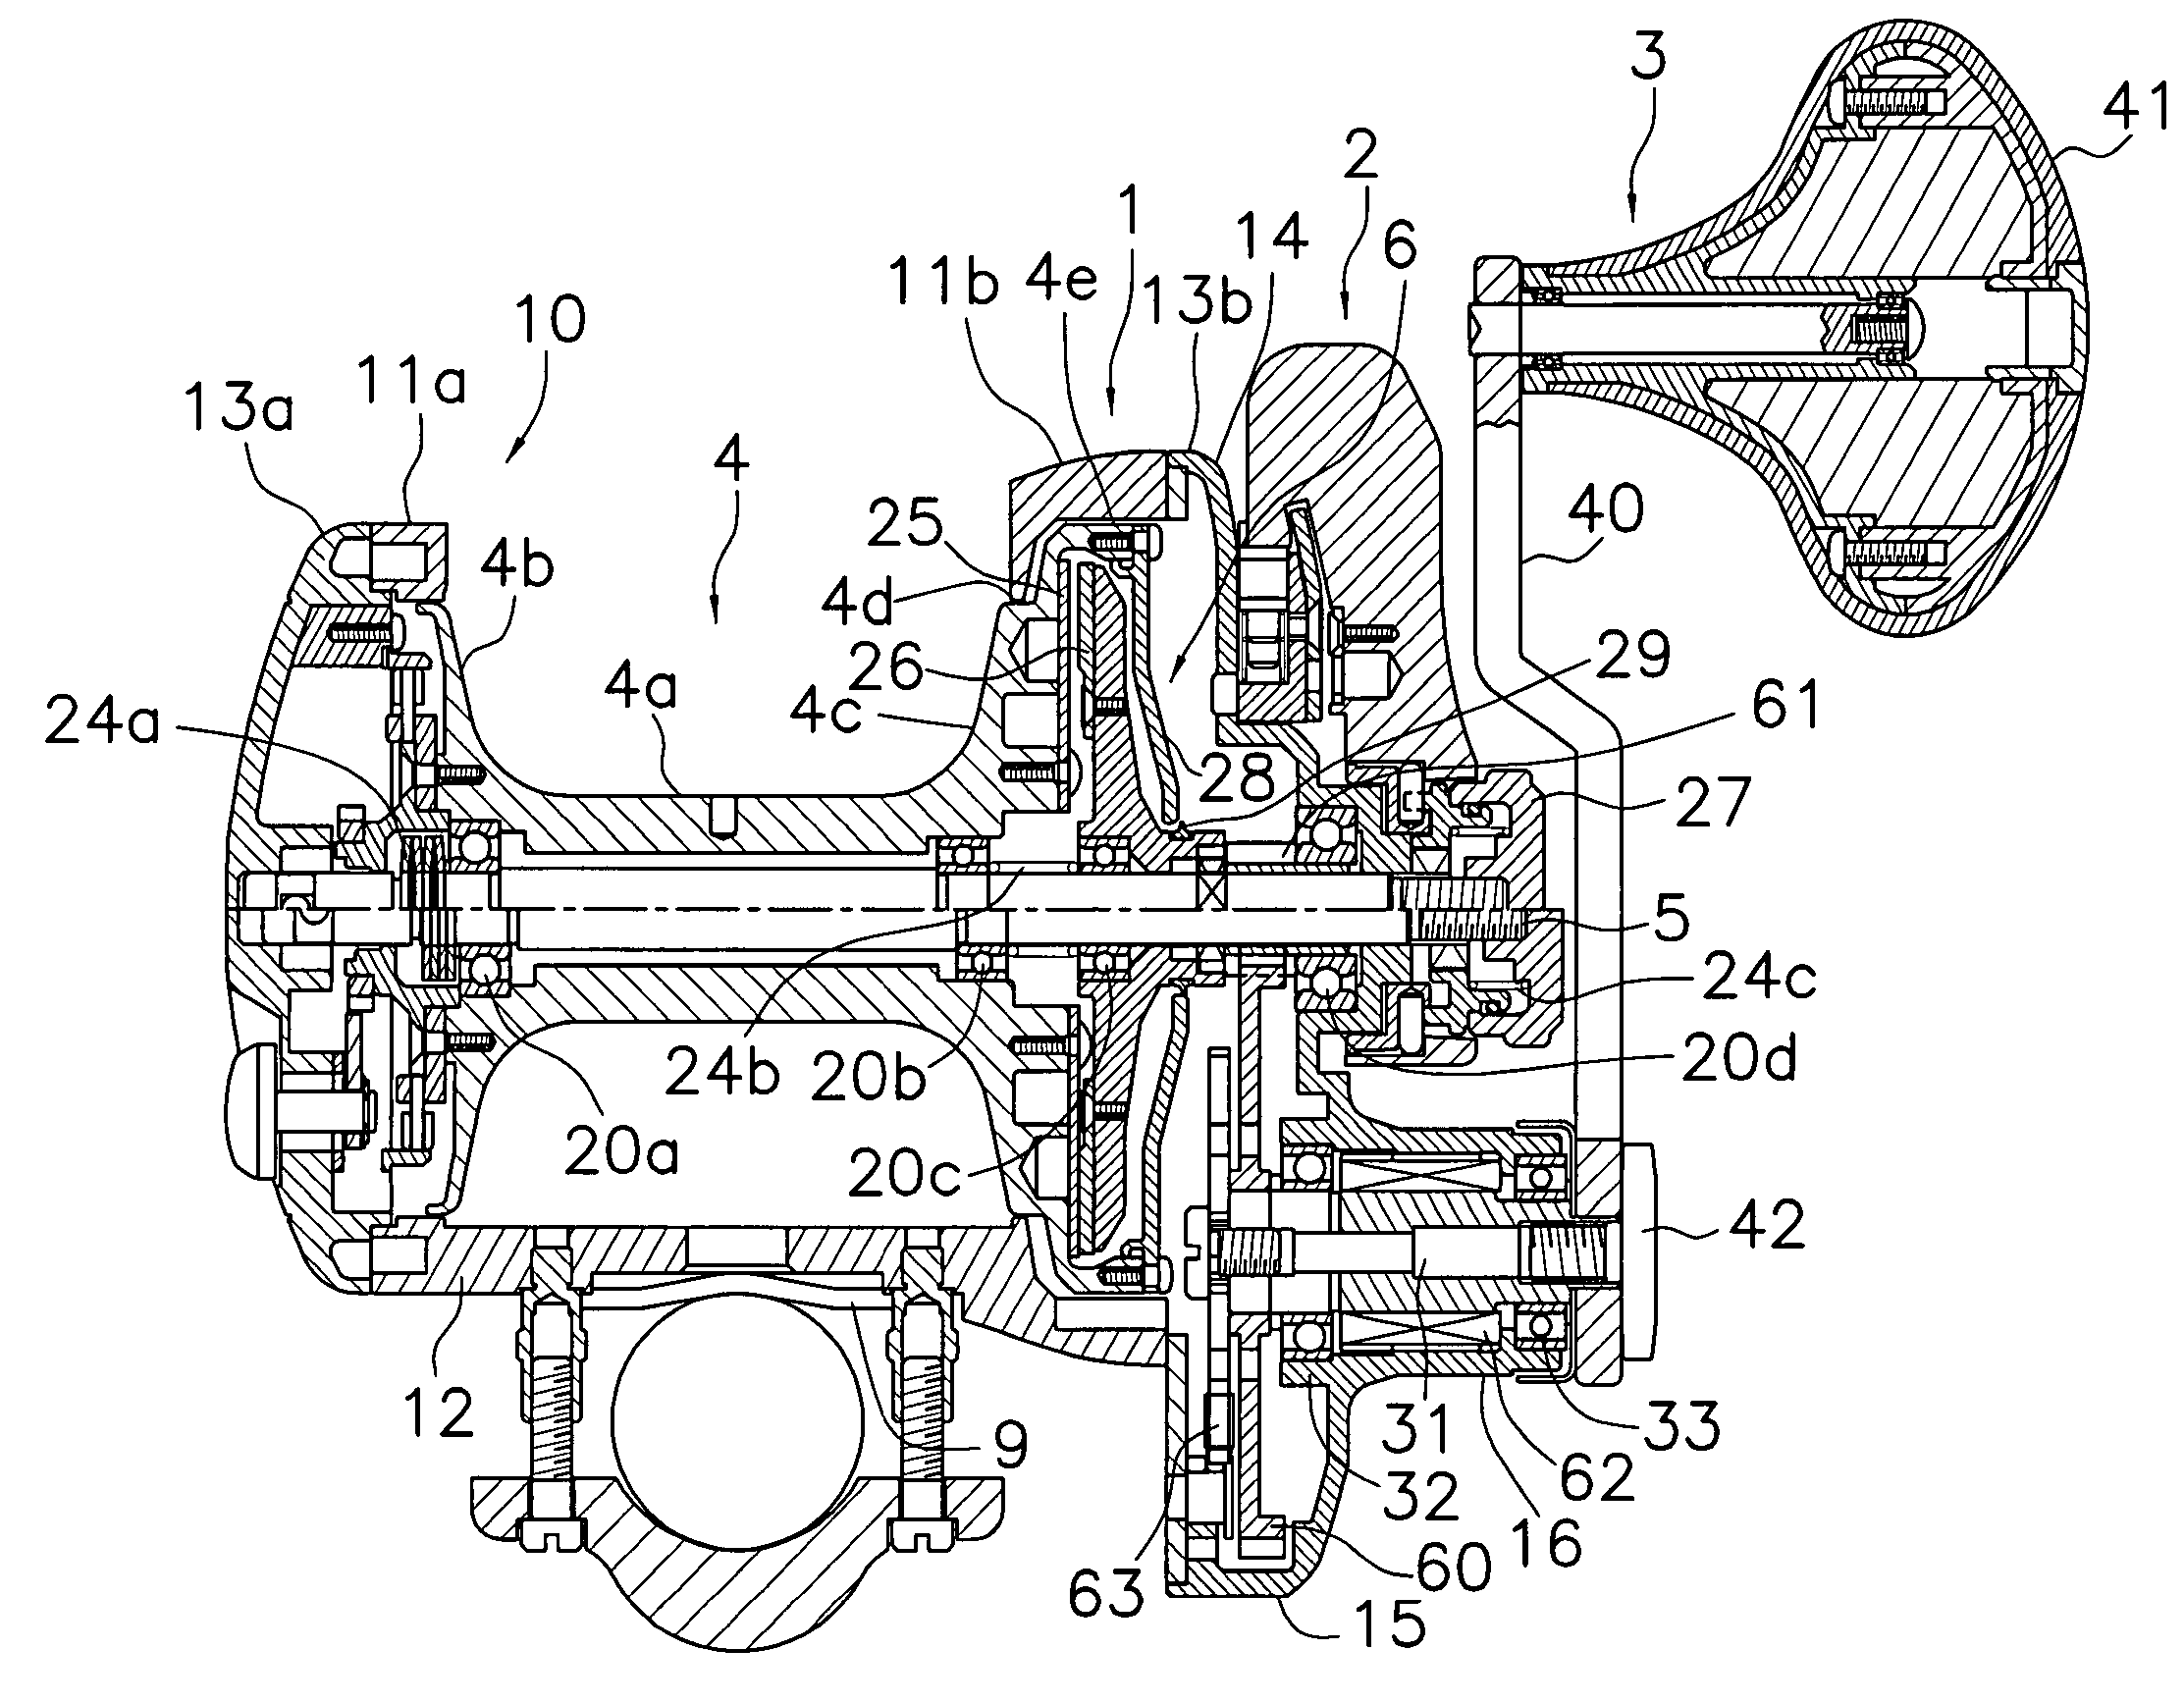 Drag mechanism for a dual bearing reel